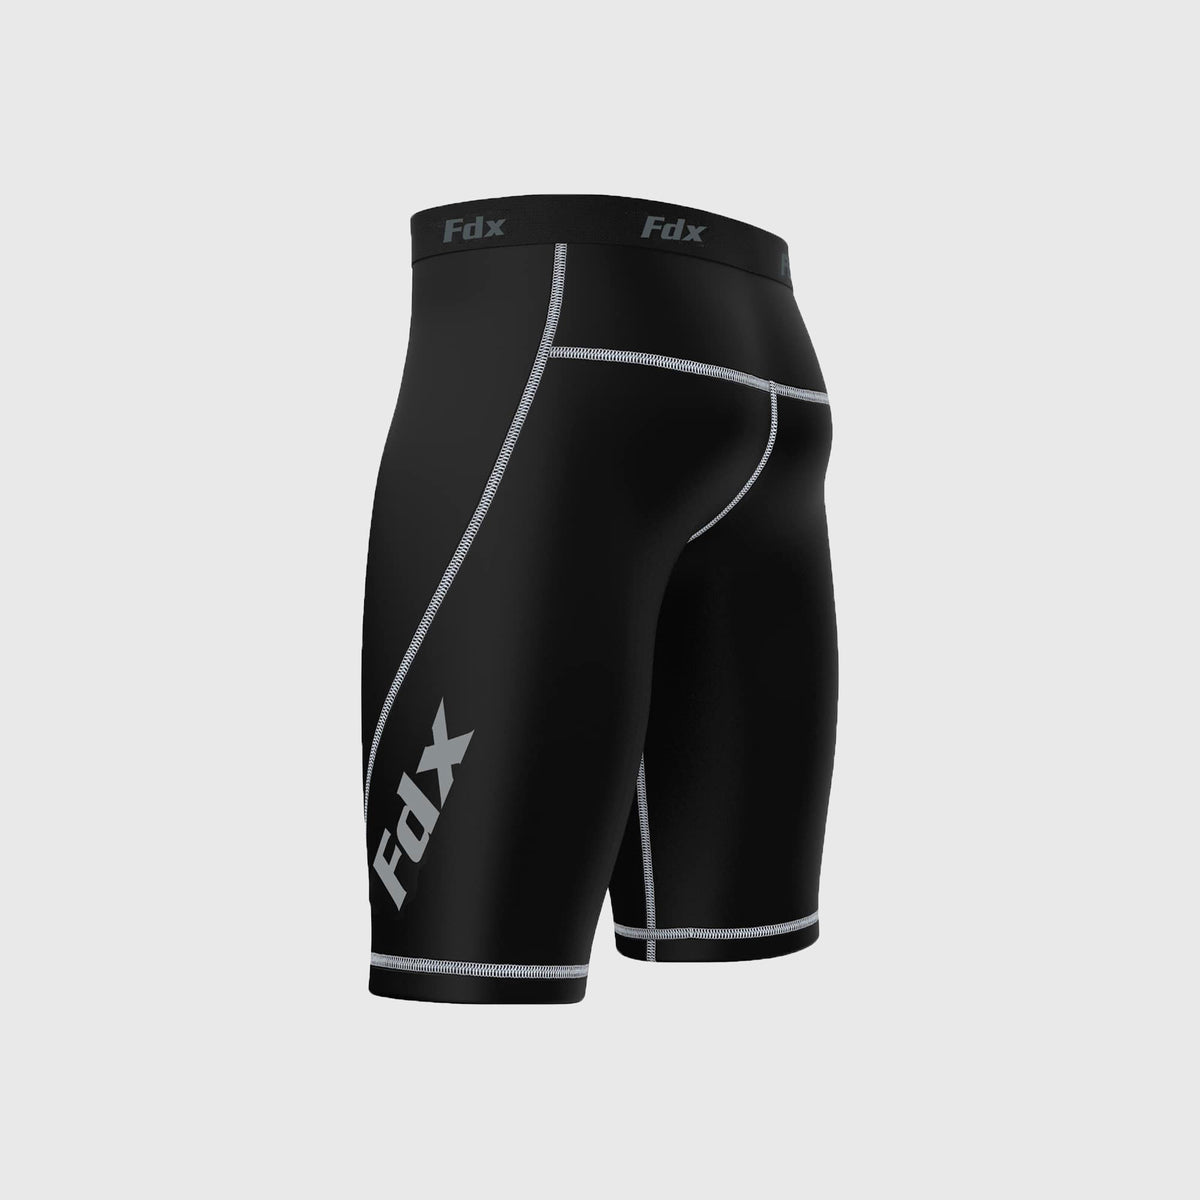 Fdx Men's & Boy's Black Compression Shorts Skin Tight Gym Pants